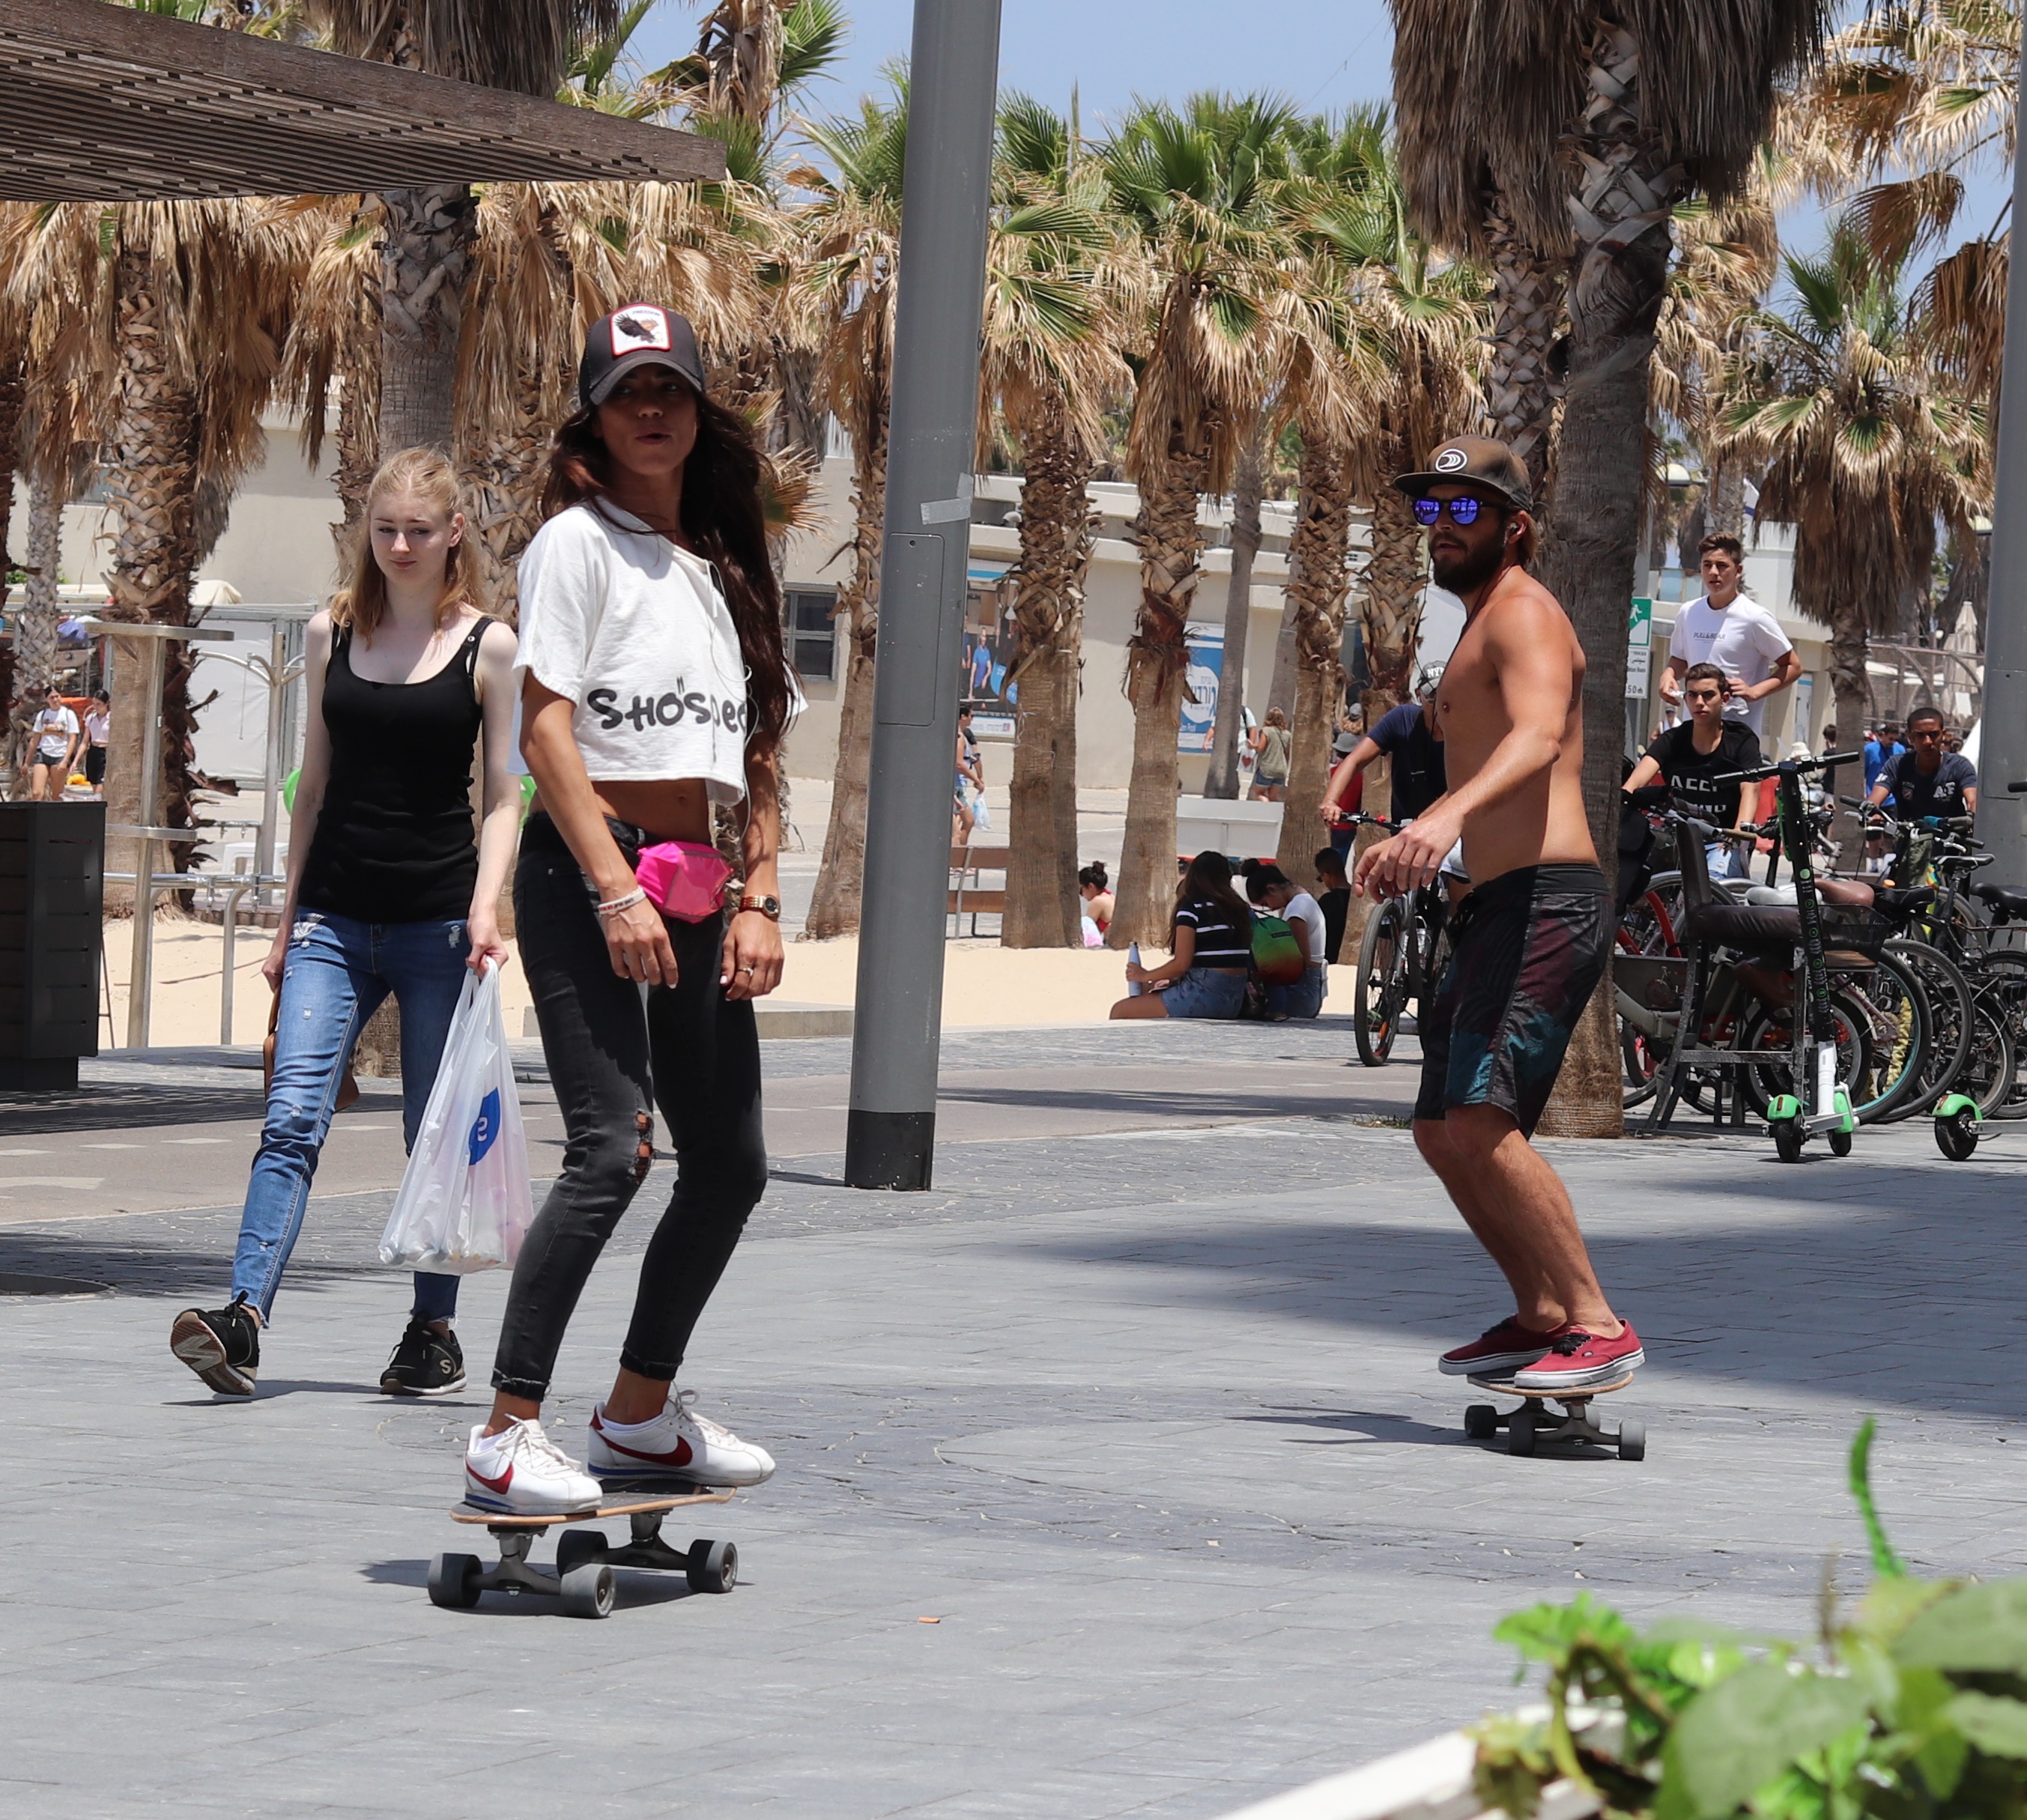 Skateboarders on the Promenade of Gordon Beach, Tel Aviv